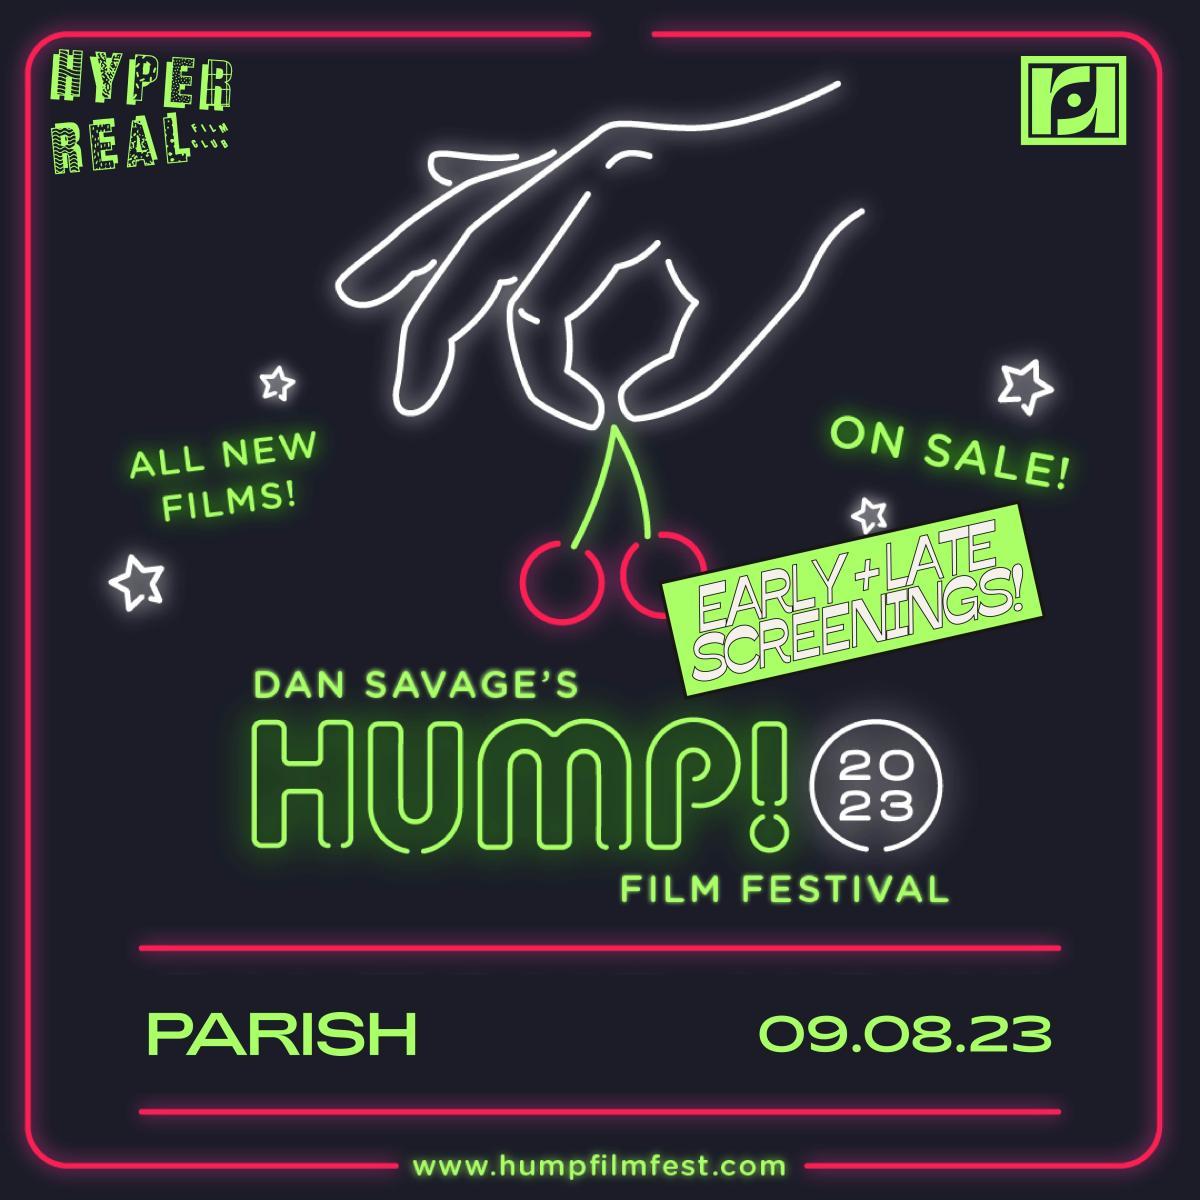 Dan Savage's HUMP! Film Festival - EARLY SHOW